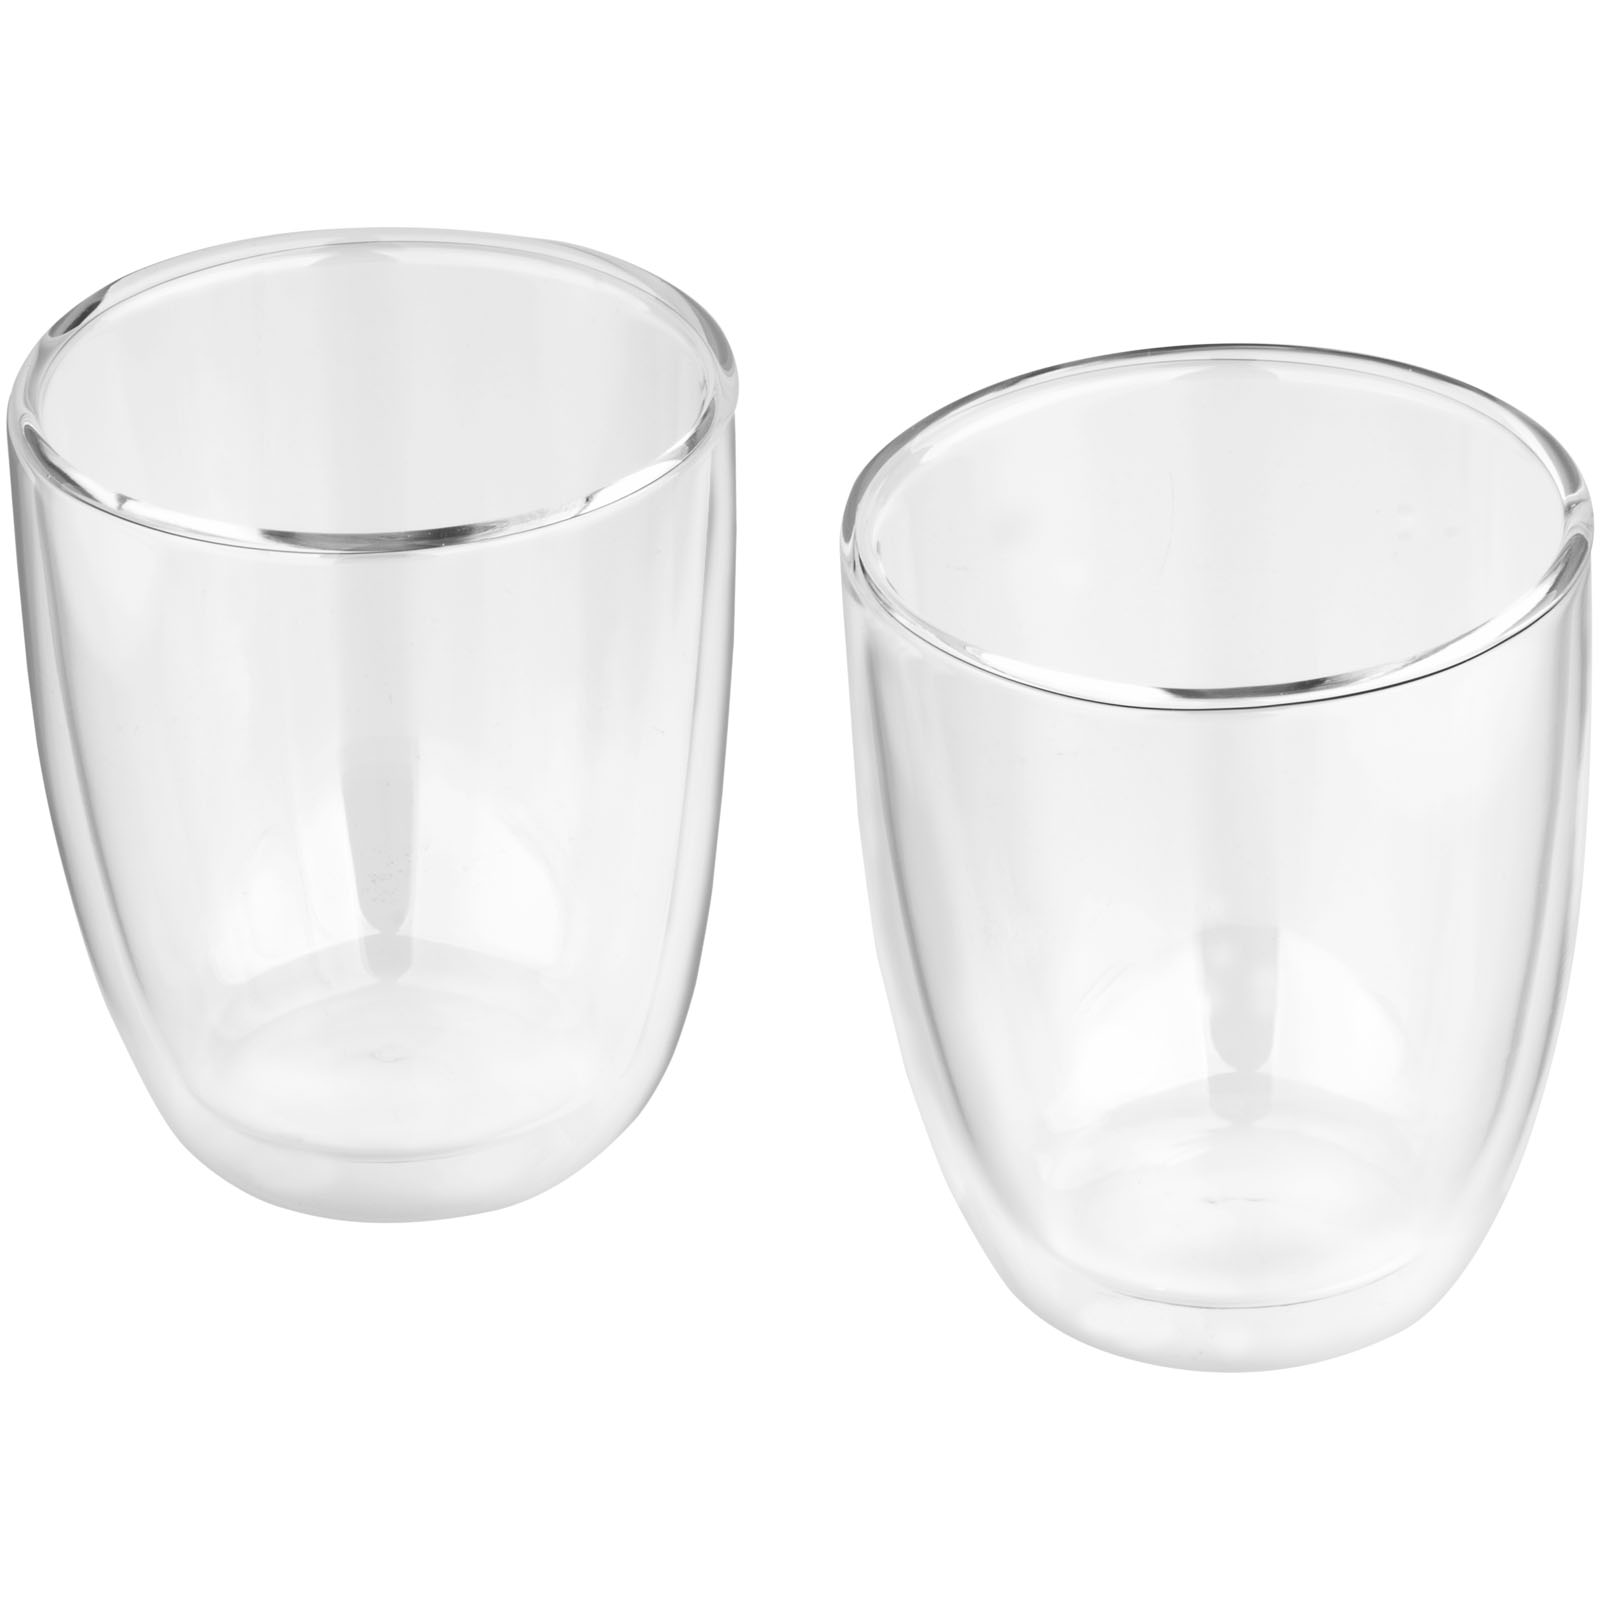 Advertising Glasses - Boda 2-piece glass set - 2